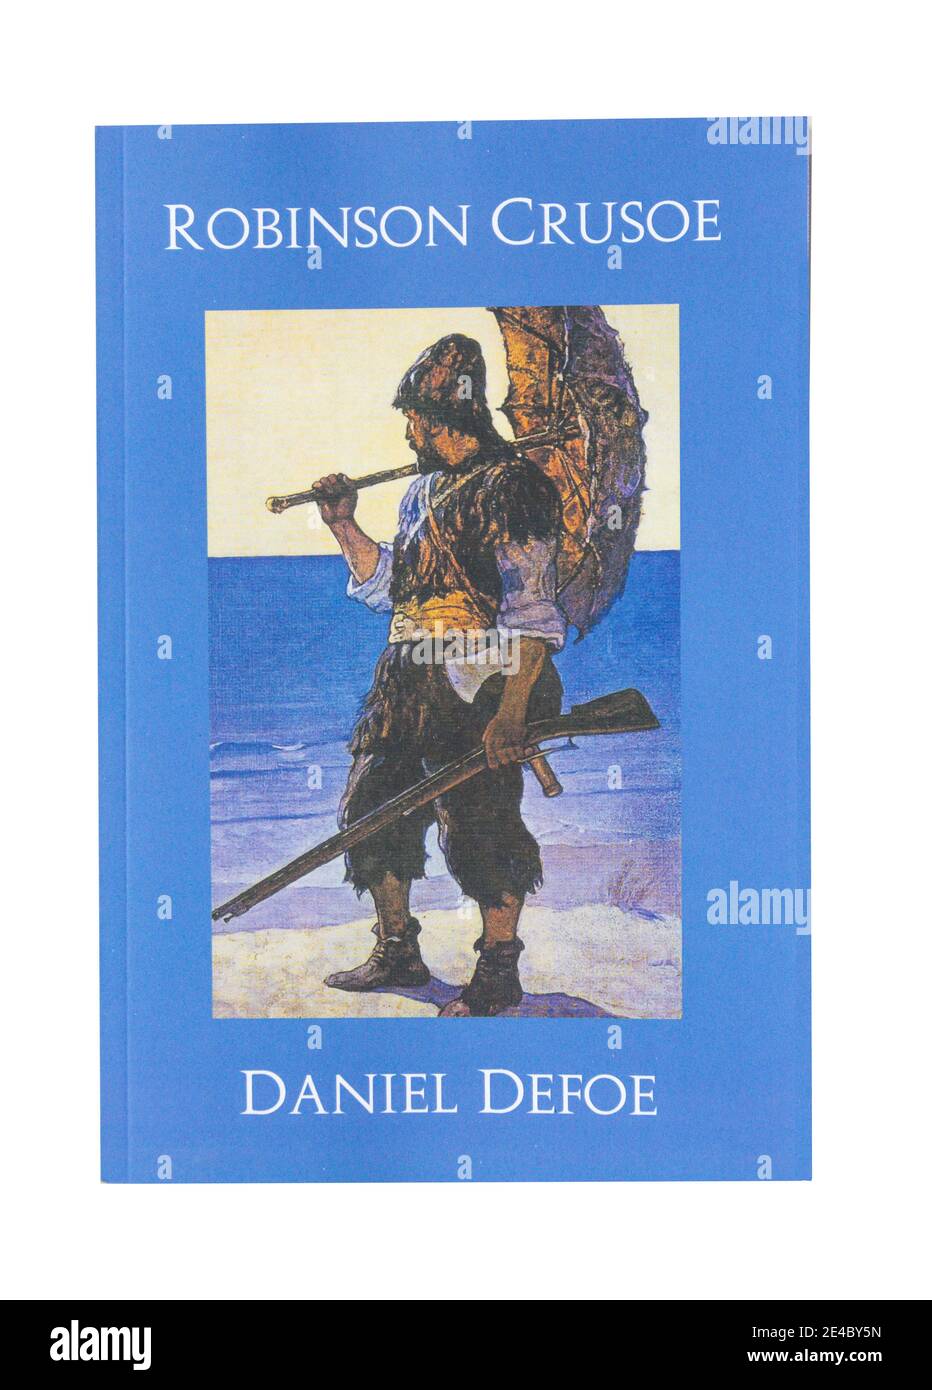 Robinson Crusoe livre de Daniel Degoe, Grand Londres, Angleterre, Royaume-Uni Banque D'Images